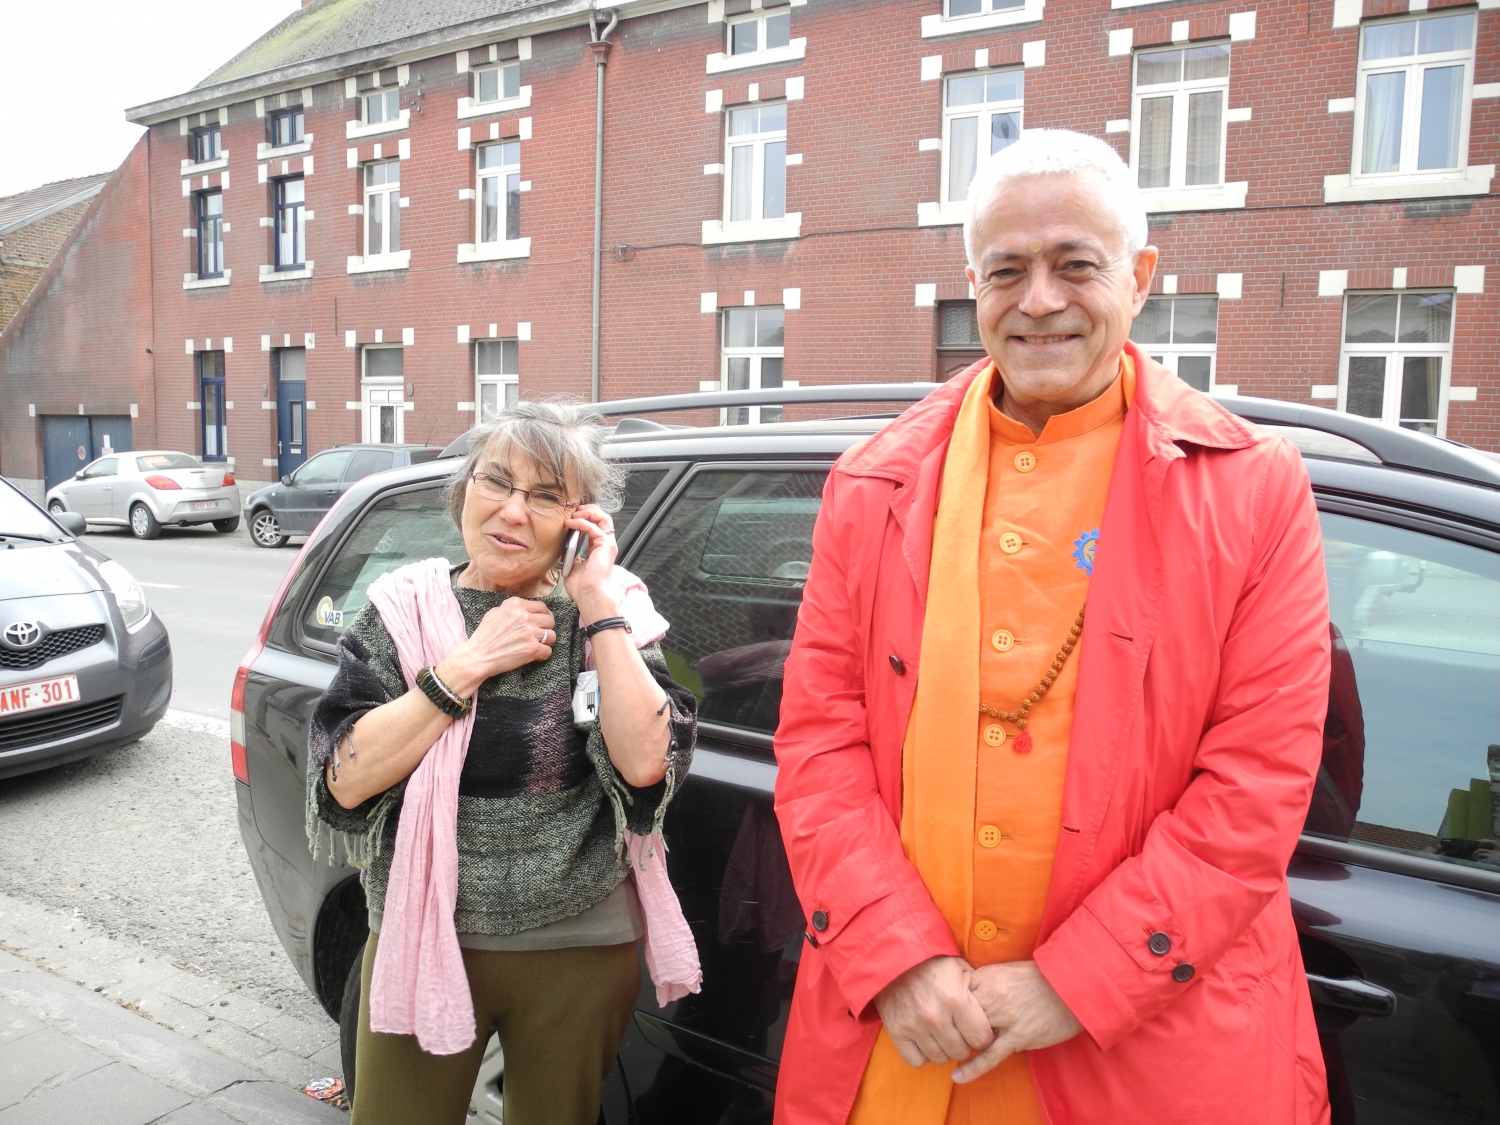 Meeting of H.H. Jagat Guru Amrta Sūryānanda Mahā Rāja with Master Thierry Van Brabant - Centre Samtosha, Jodoigne, Belgium - 2012, March